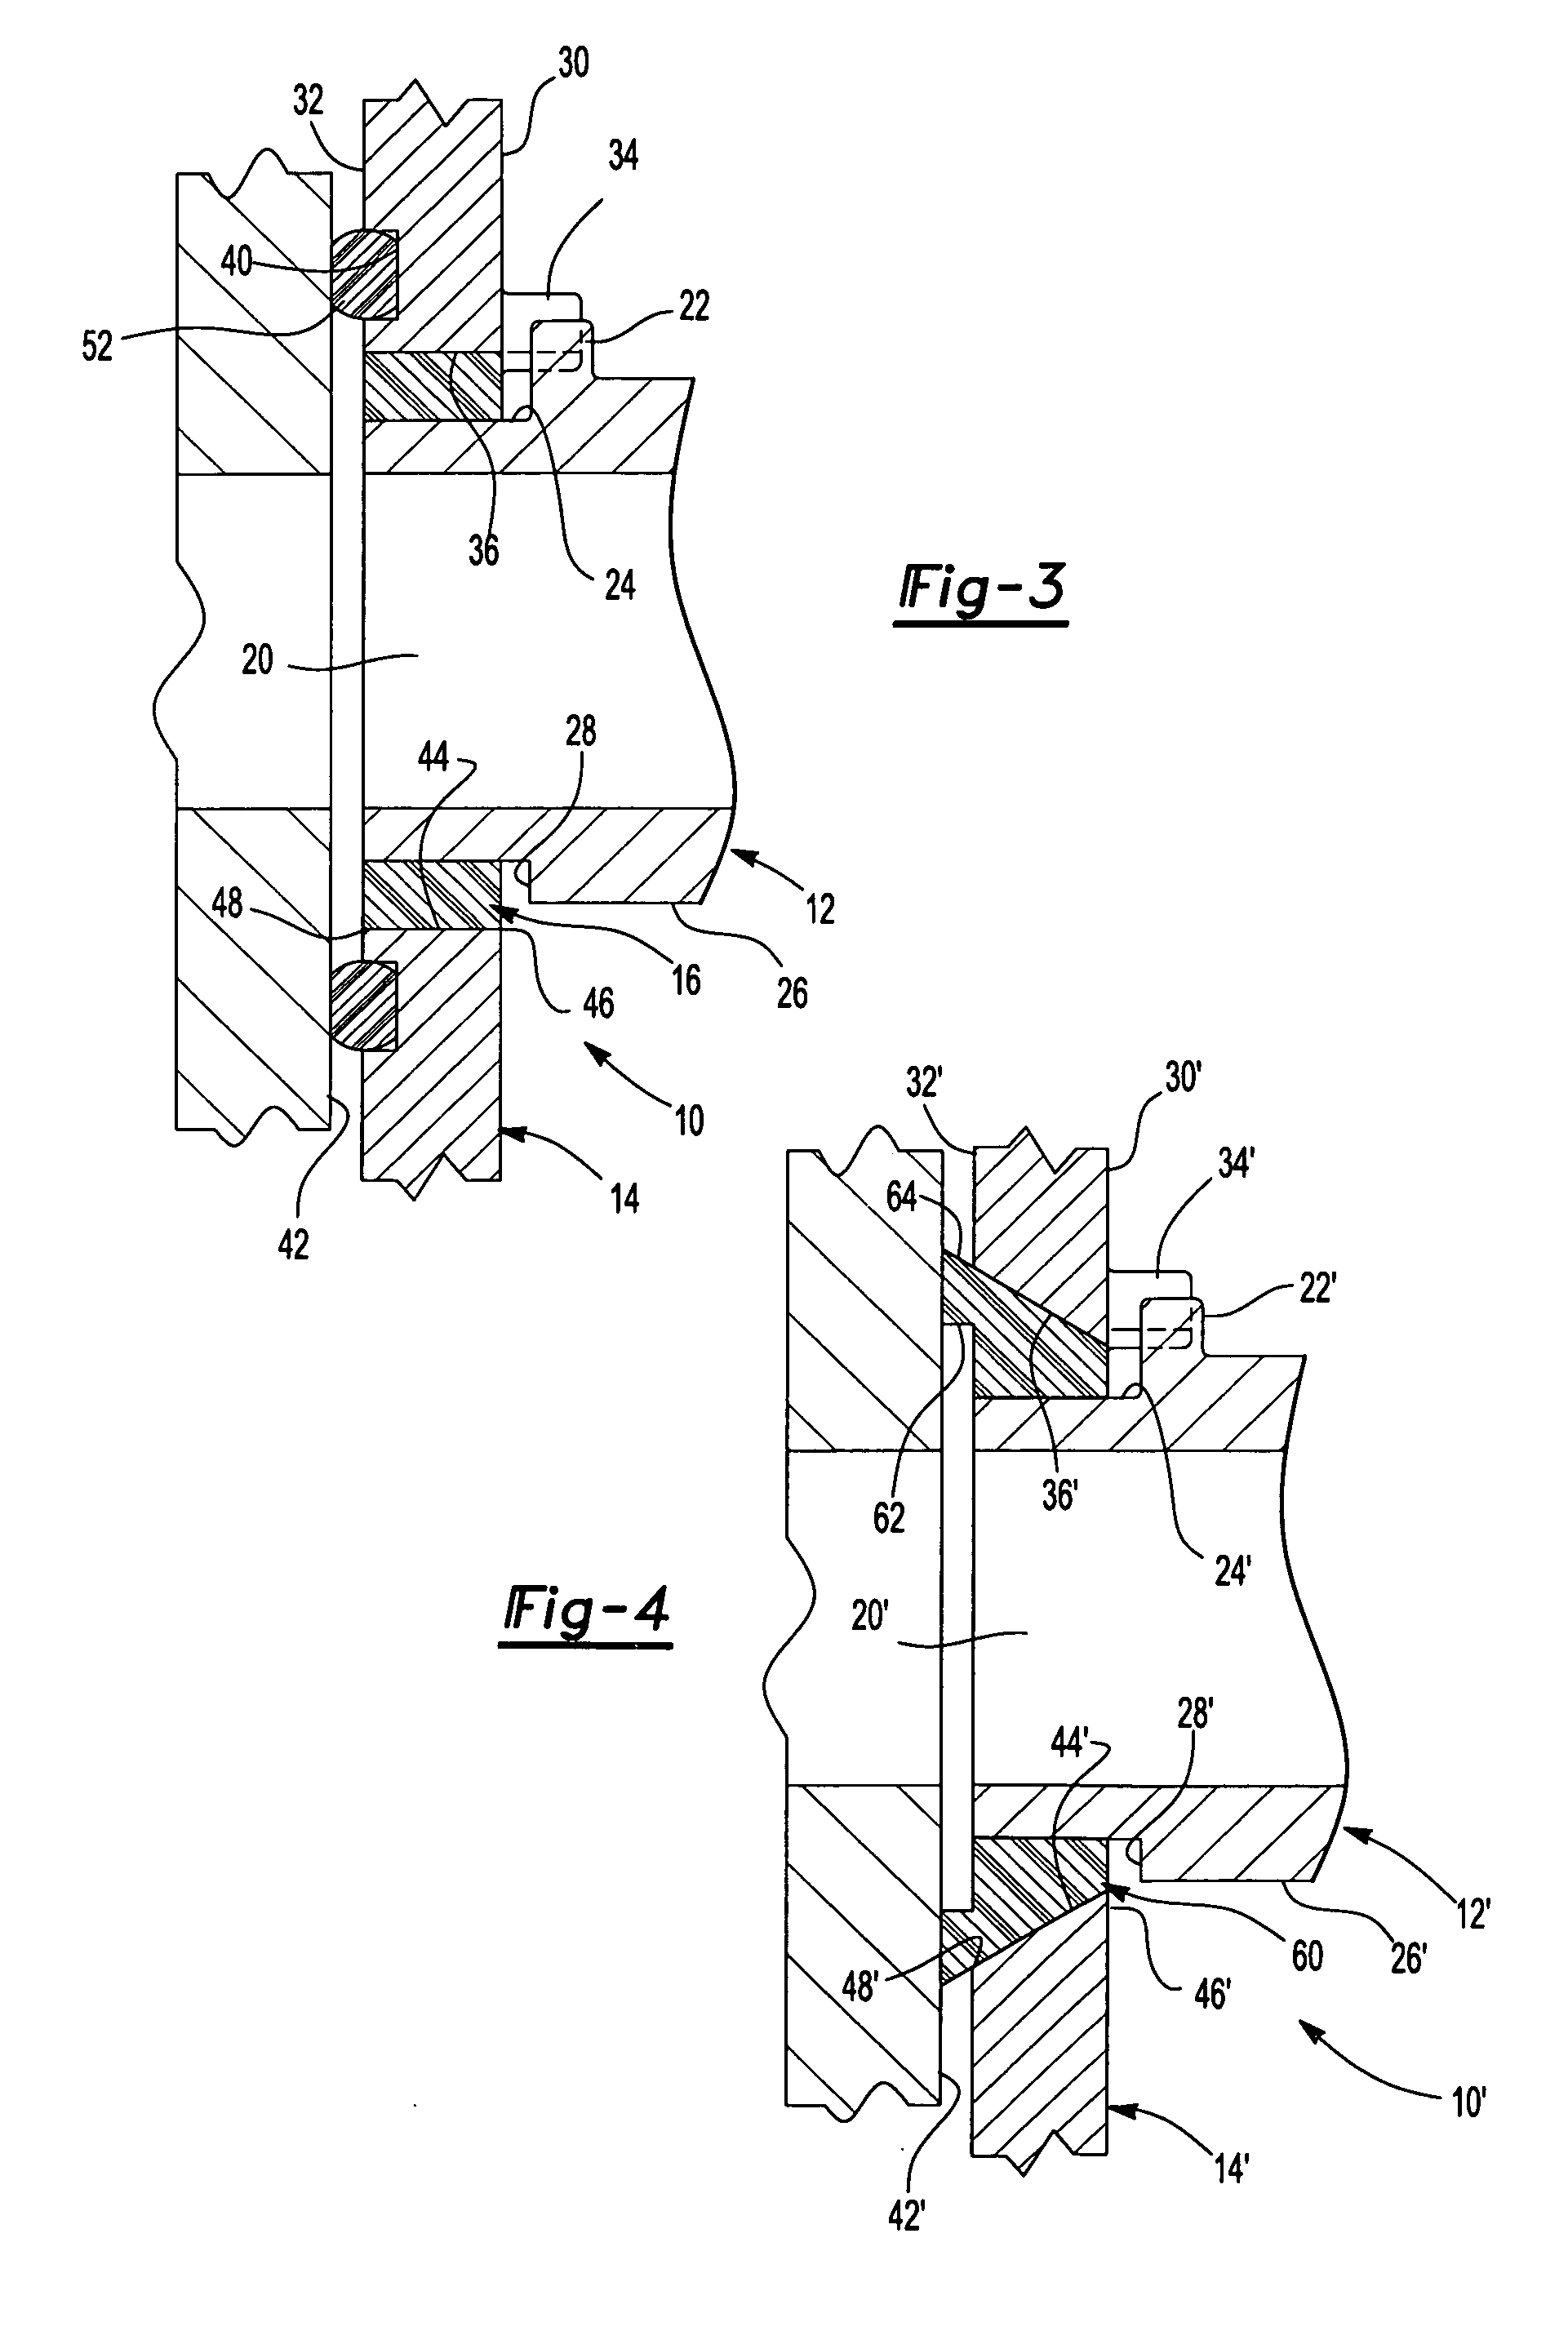 Intake manifold and seal